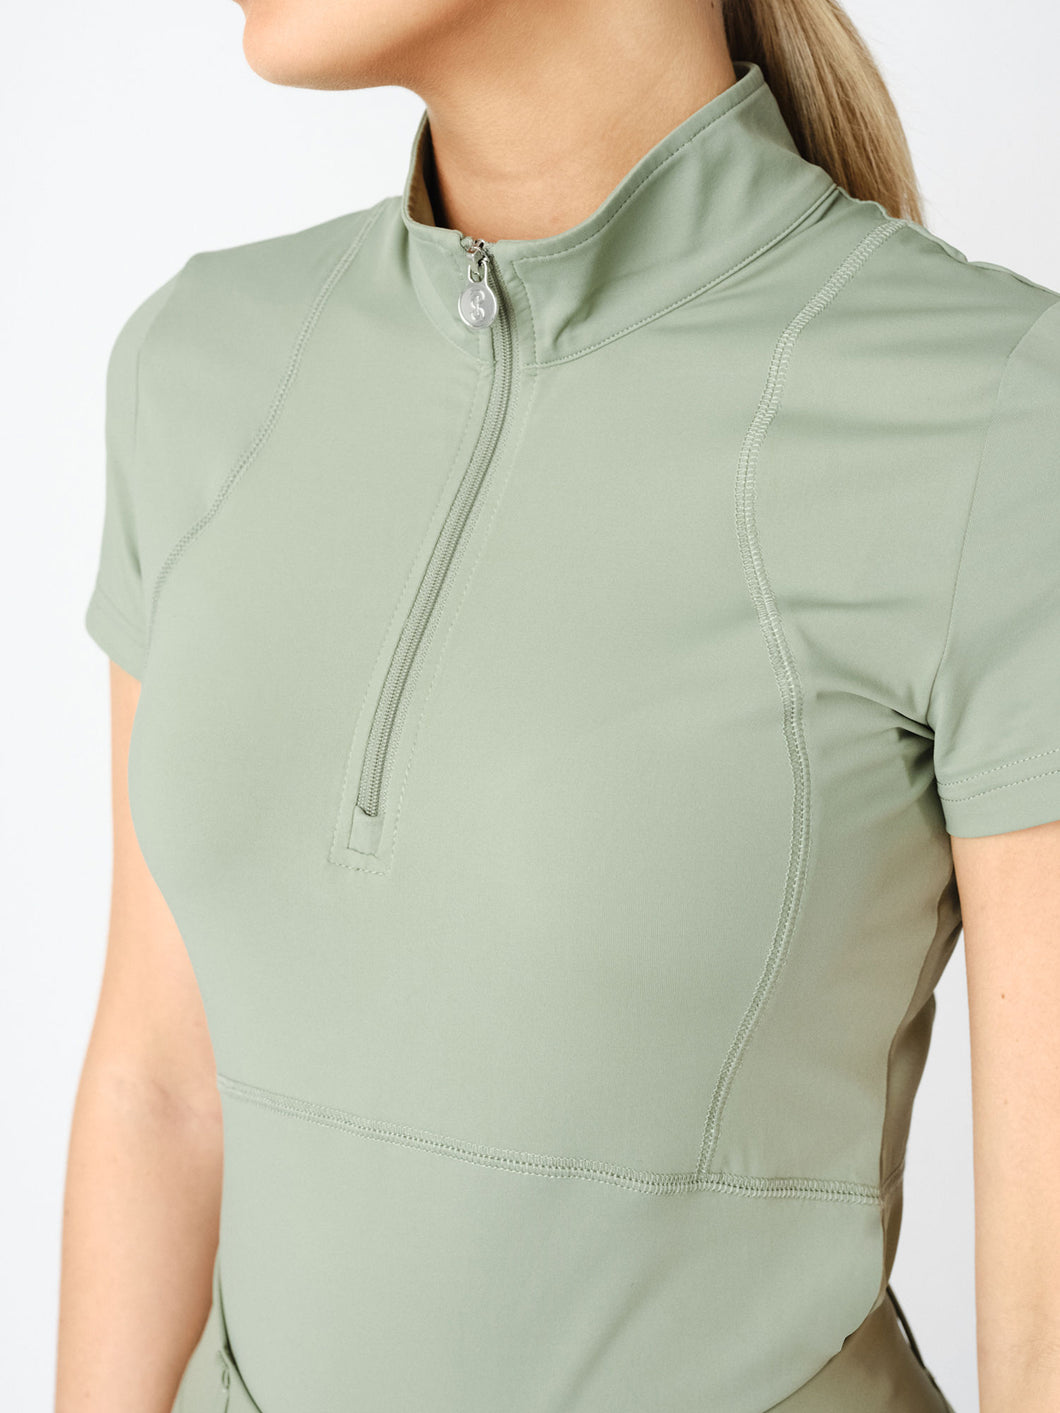 Adele Short Sleeve Top - Khaki Green